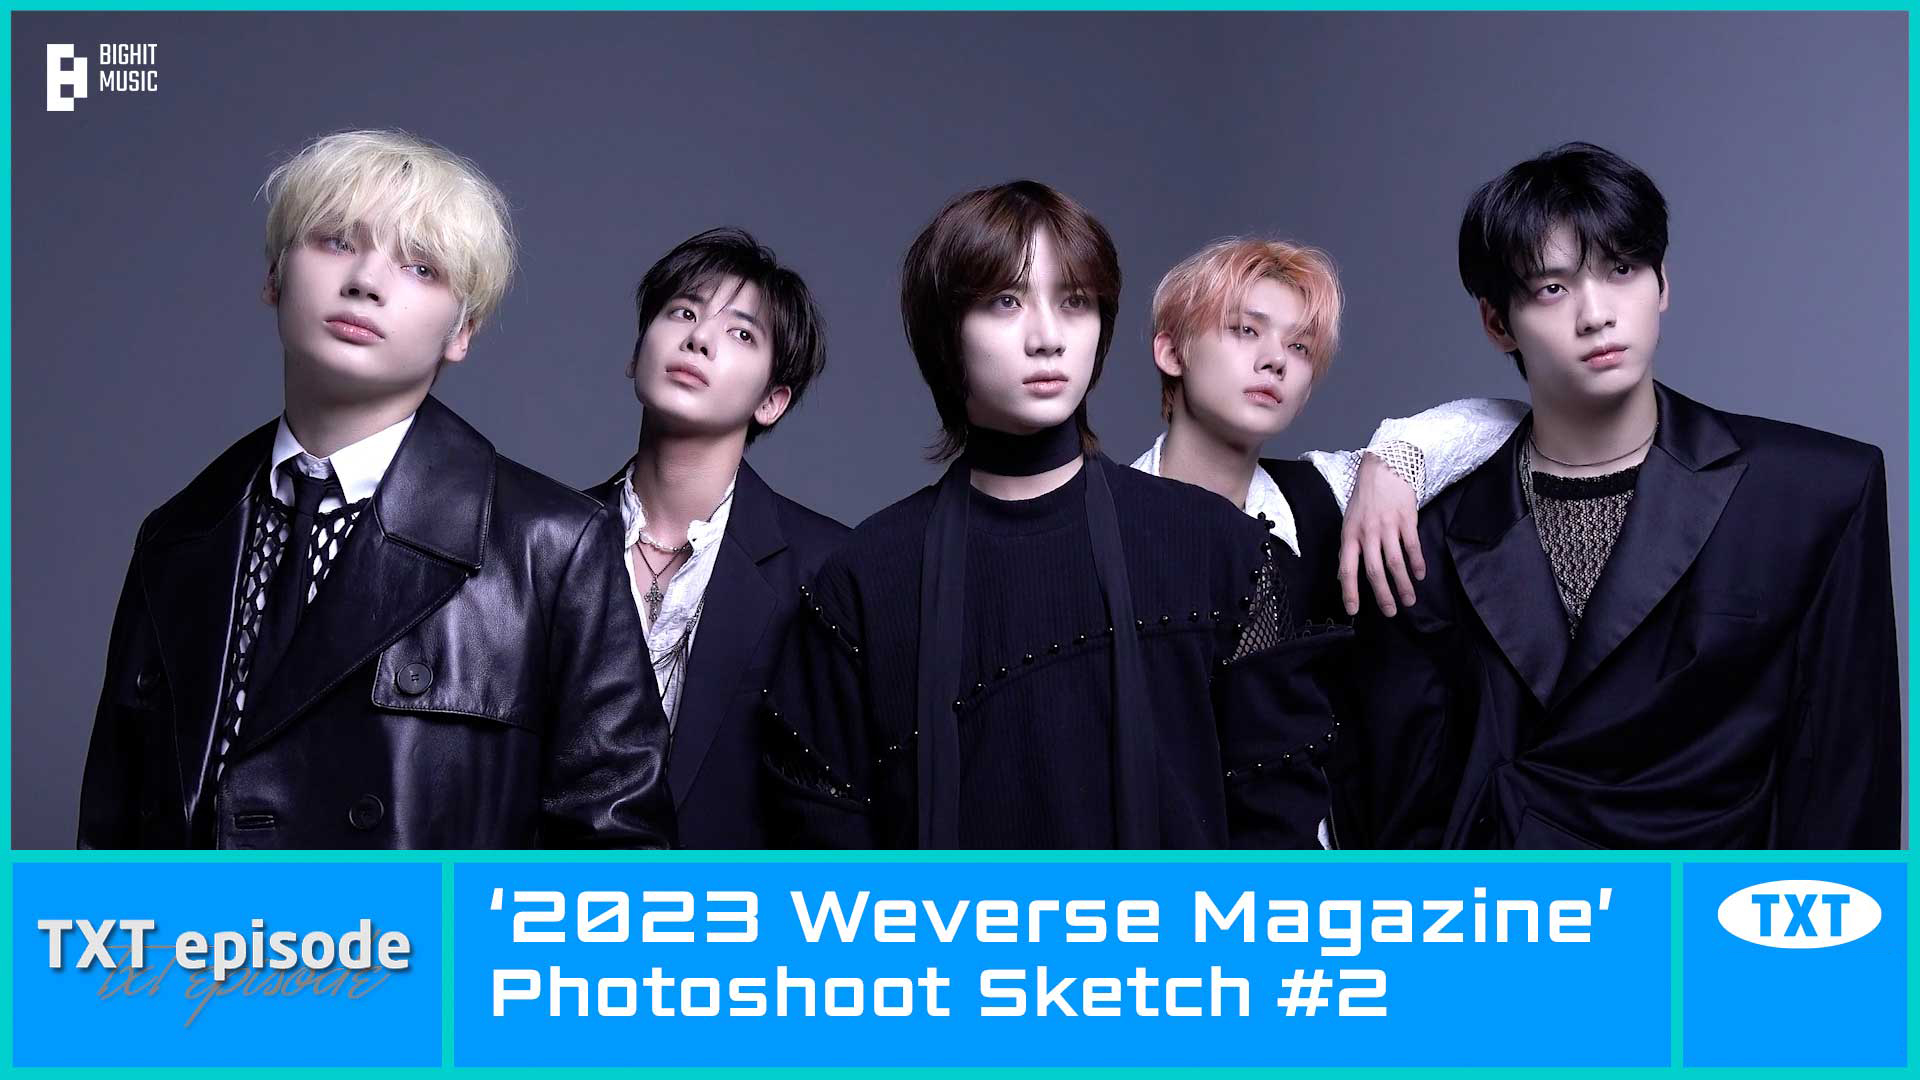 [EPISODE] TXT (투모로우바이투게더) '2023 Weverse Magazine’ Photoshoot Sketch #2